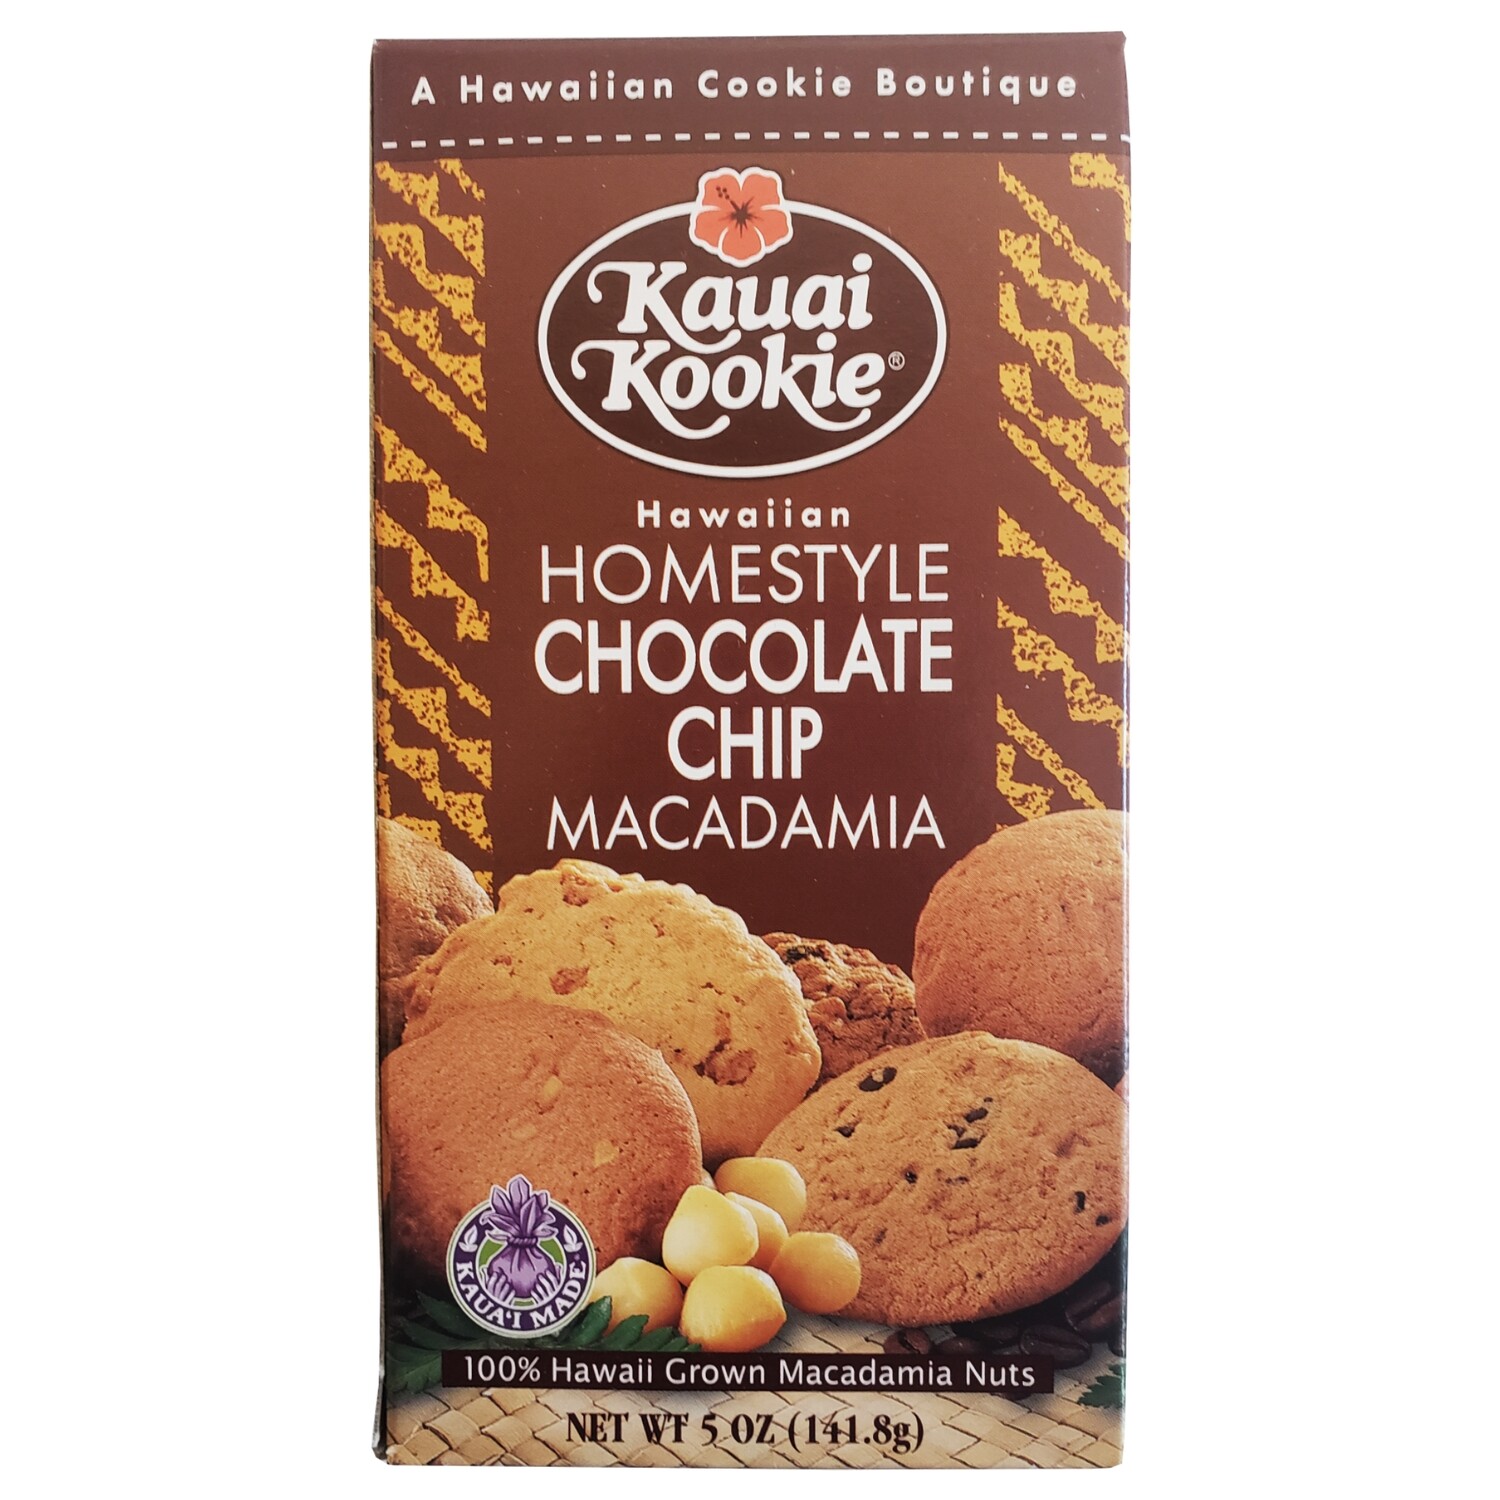 Kauai Kookie Chocolate Chip Macadamia Cookies 5 oz